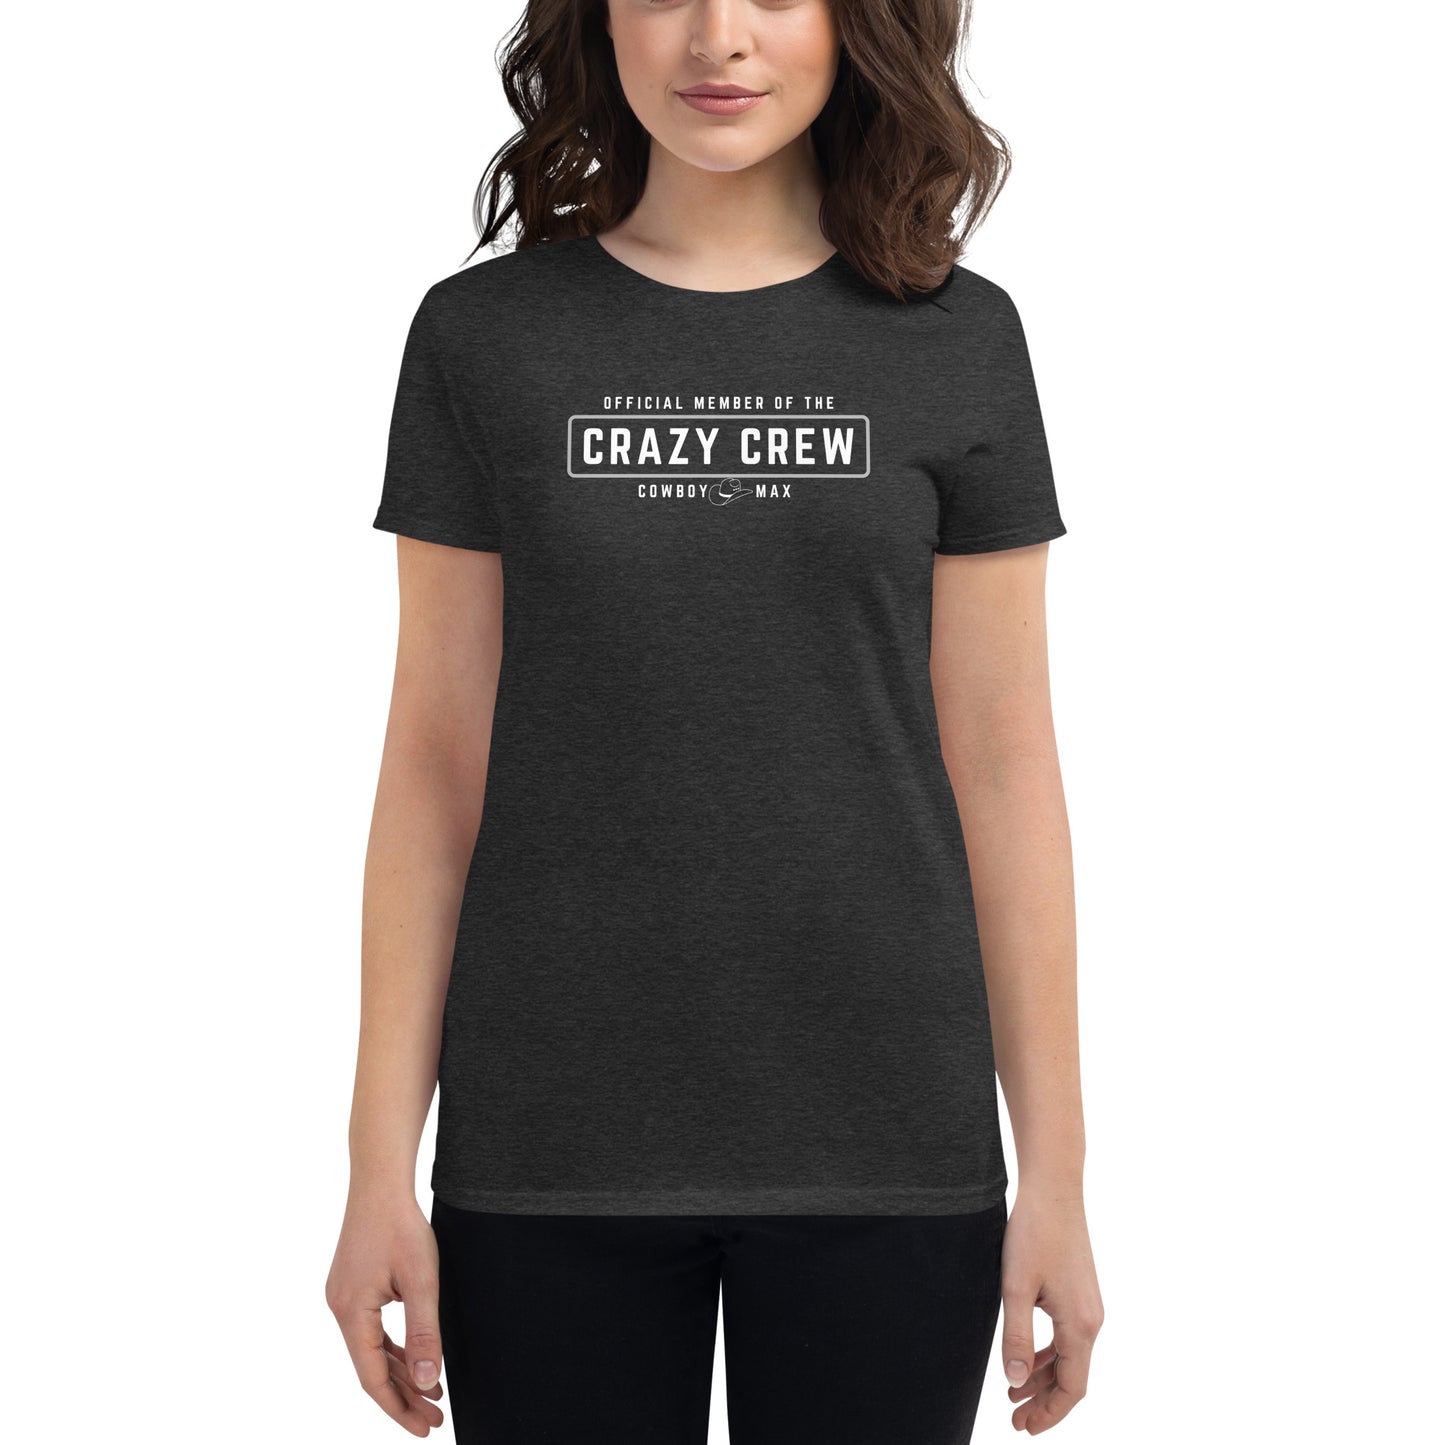 Member Of The Crazy Crew: Women's Short Sleeve T-shirt